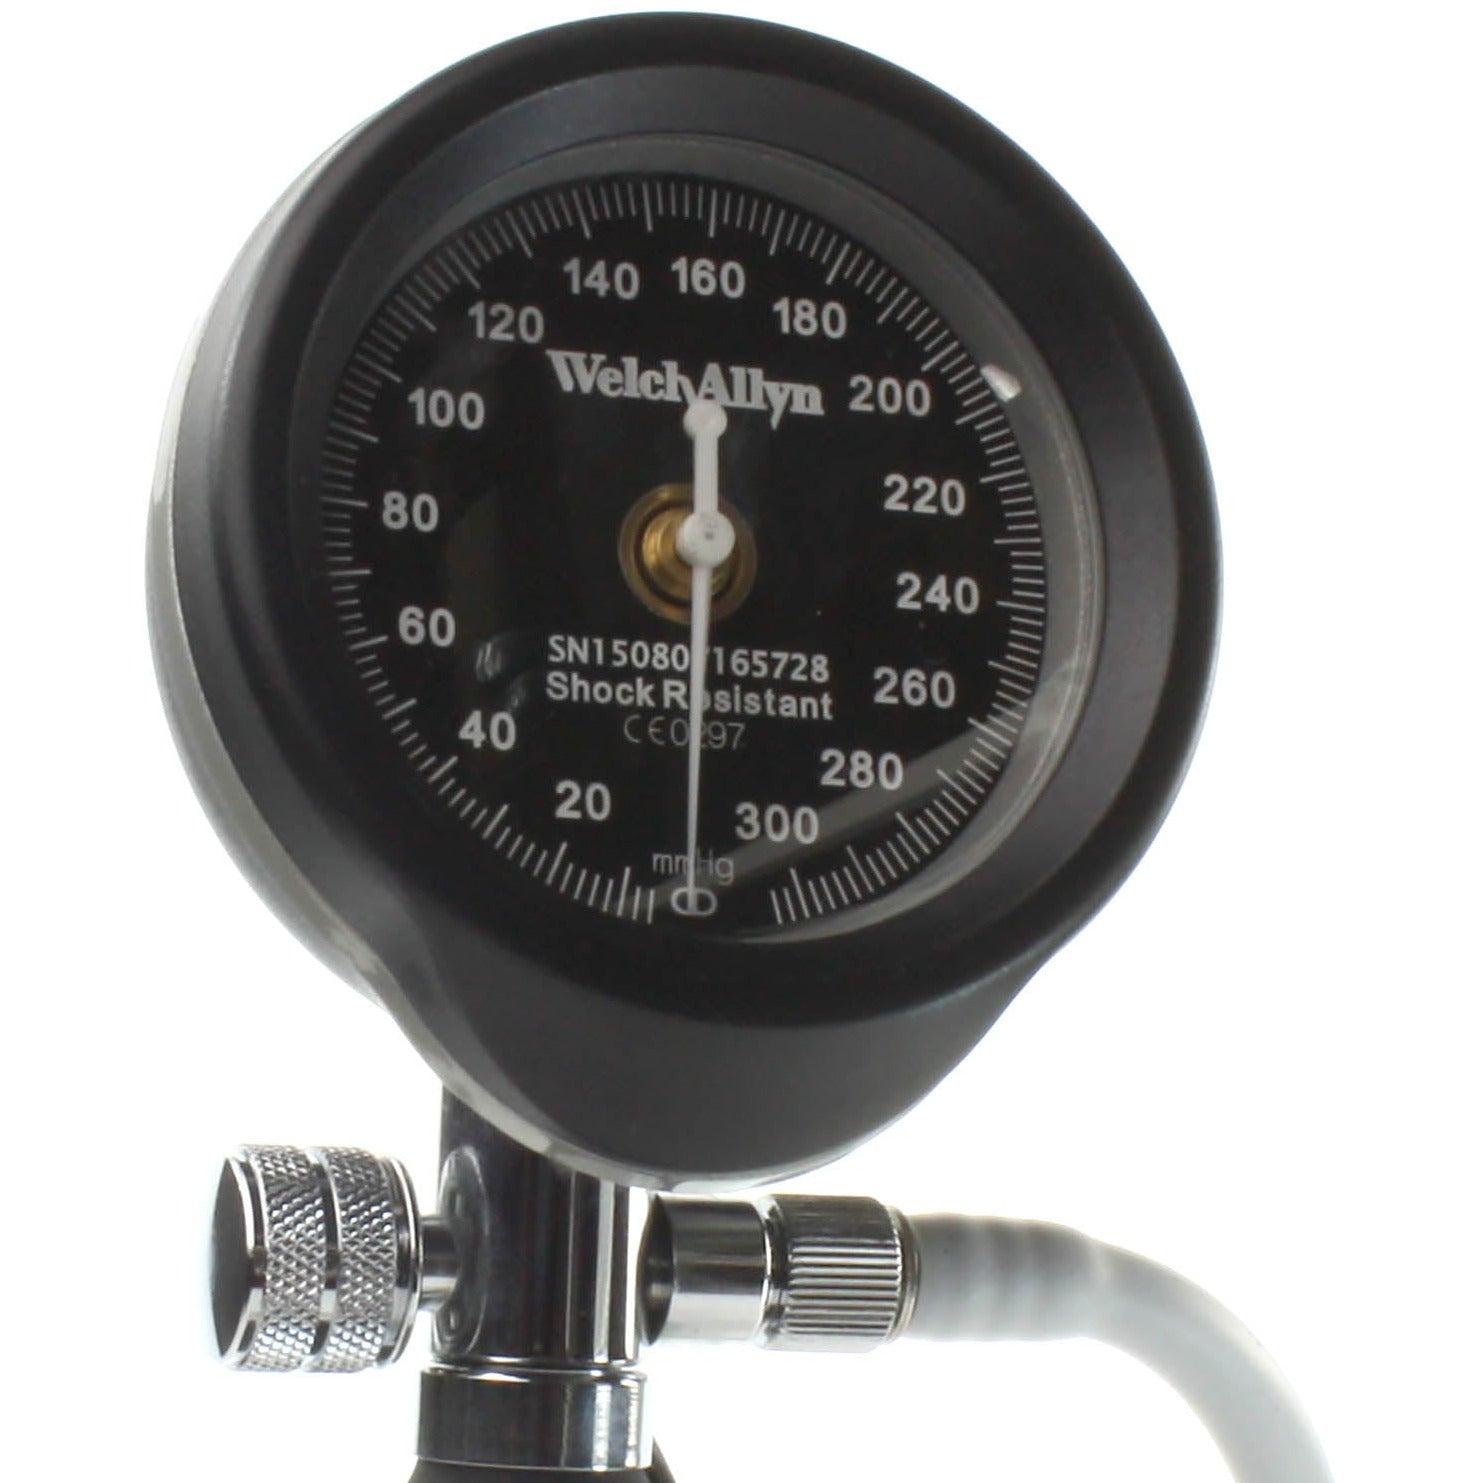 Welch Allyn DuraShock DS55 Sphygmomanometer - Black